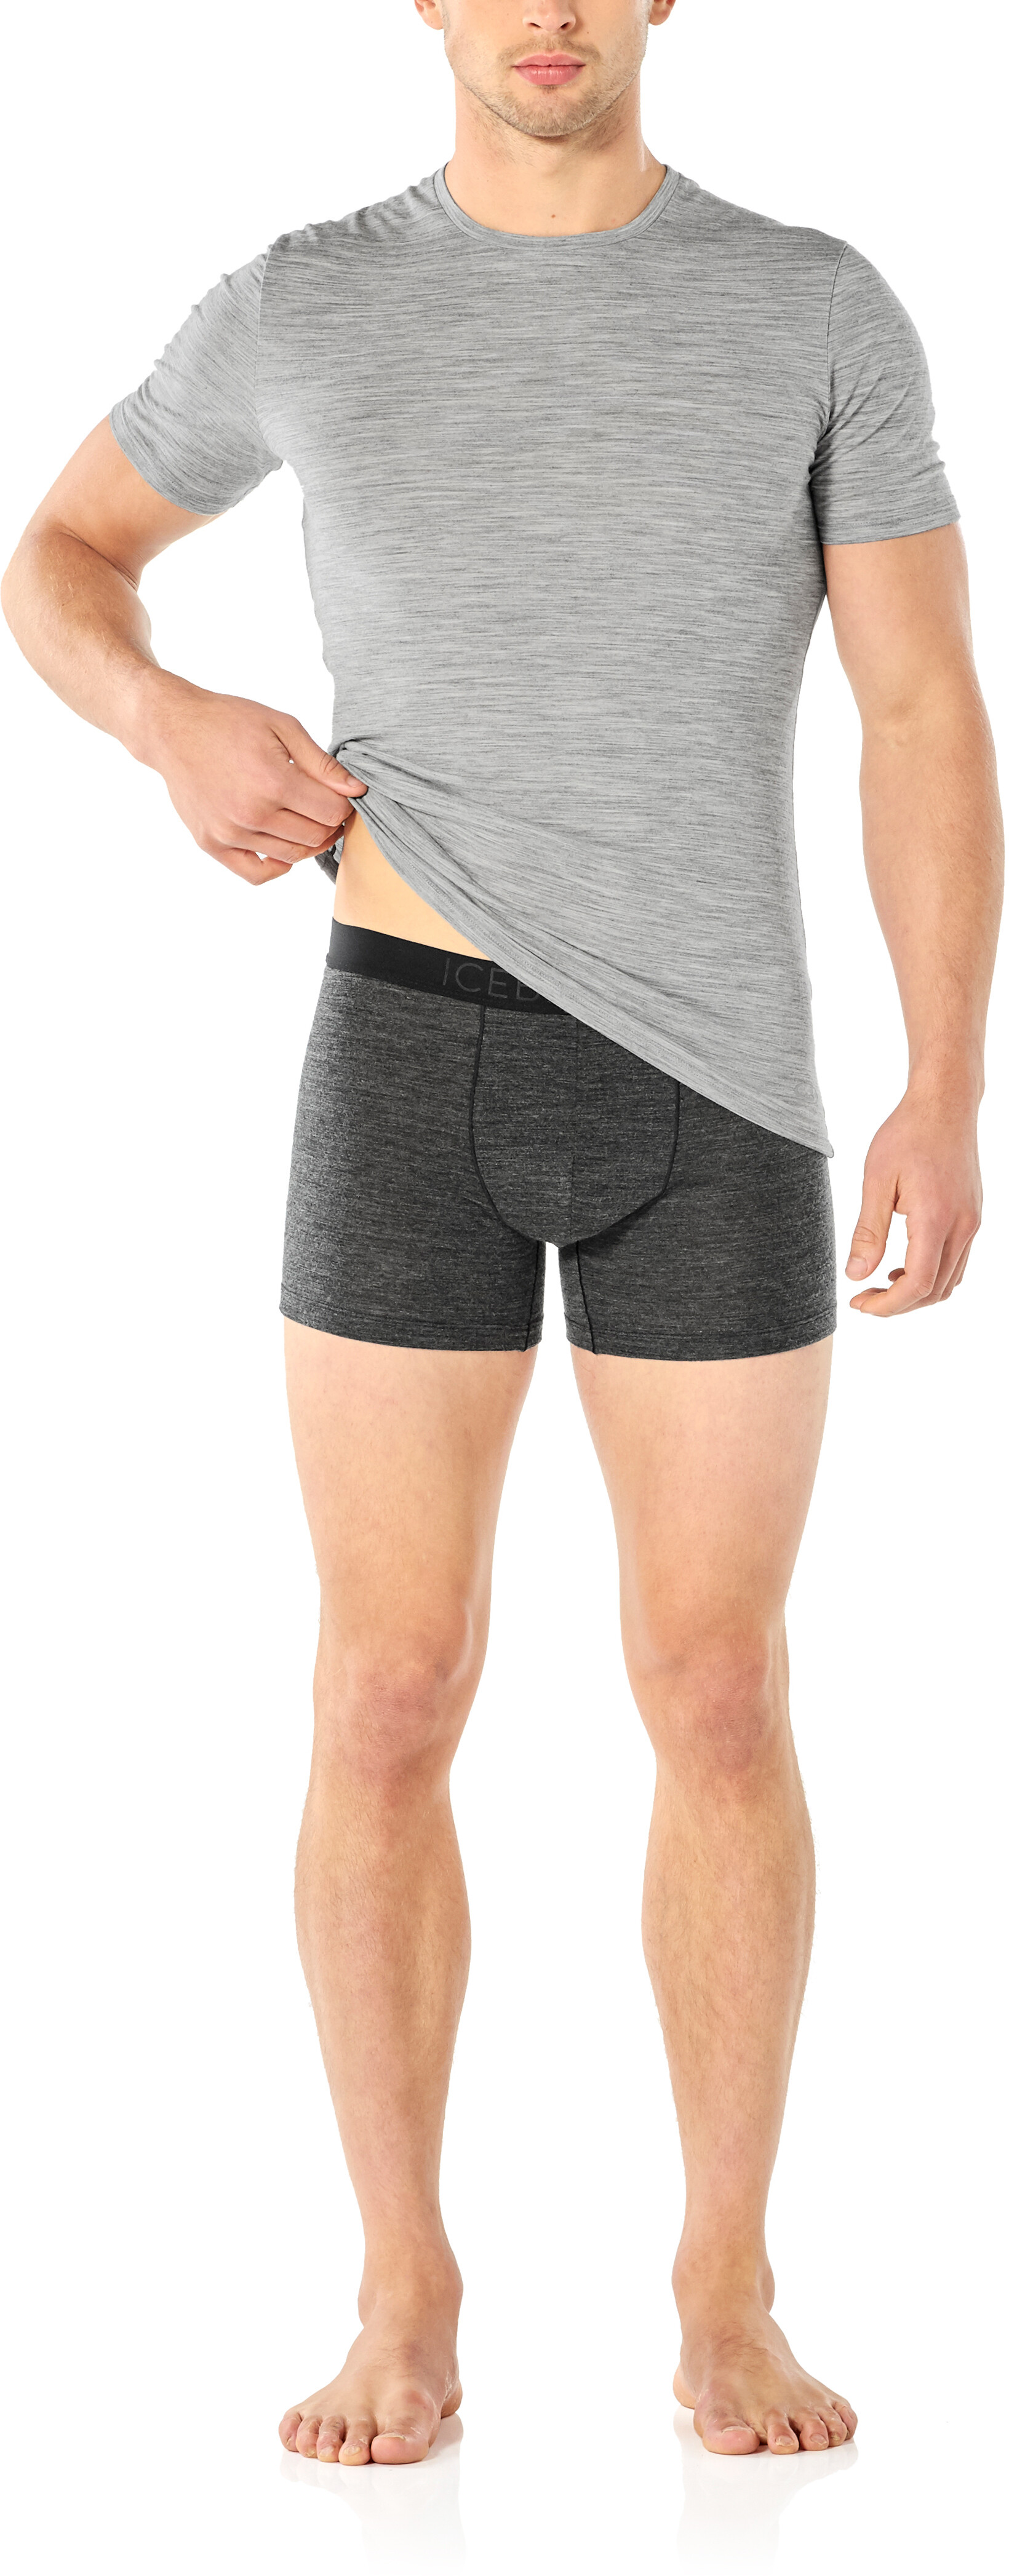 Icebreaker Anatomica Cool-Lite Boxers Men black heather 2020 Underwear